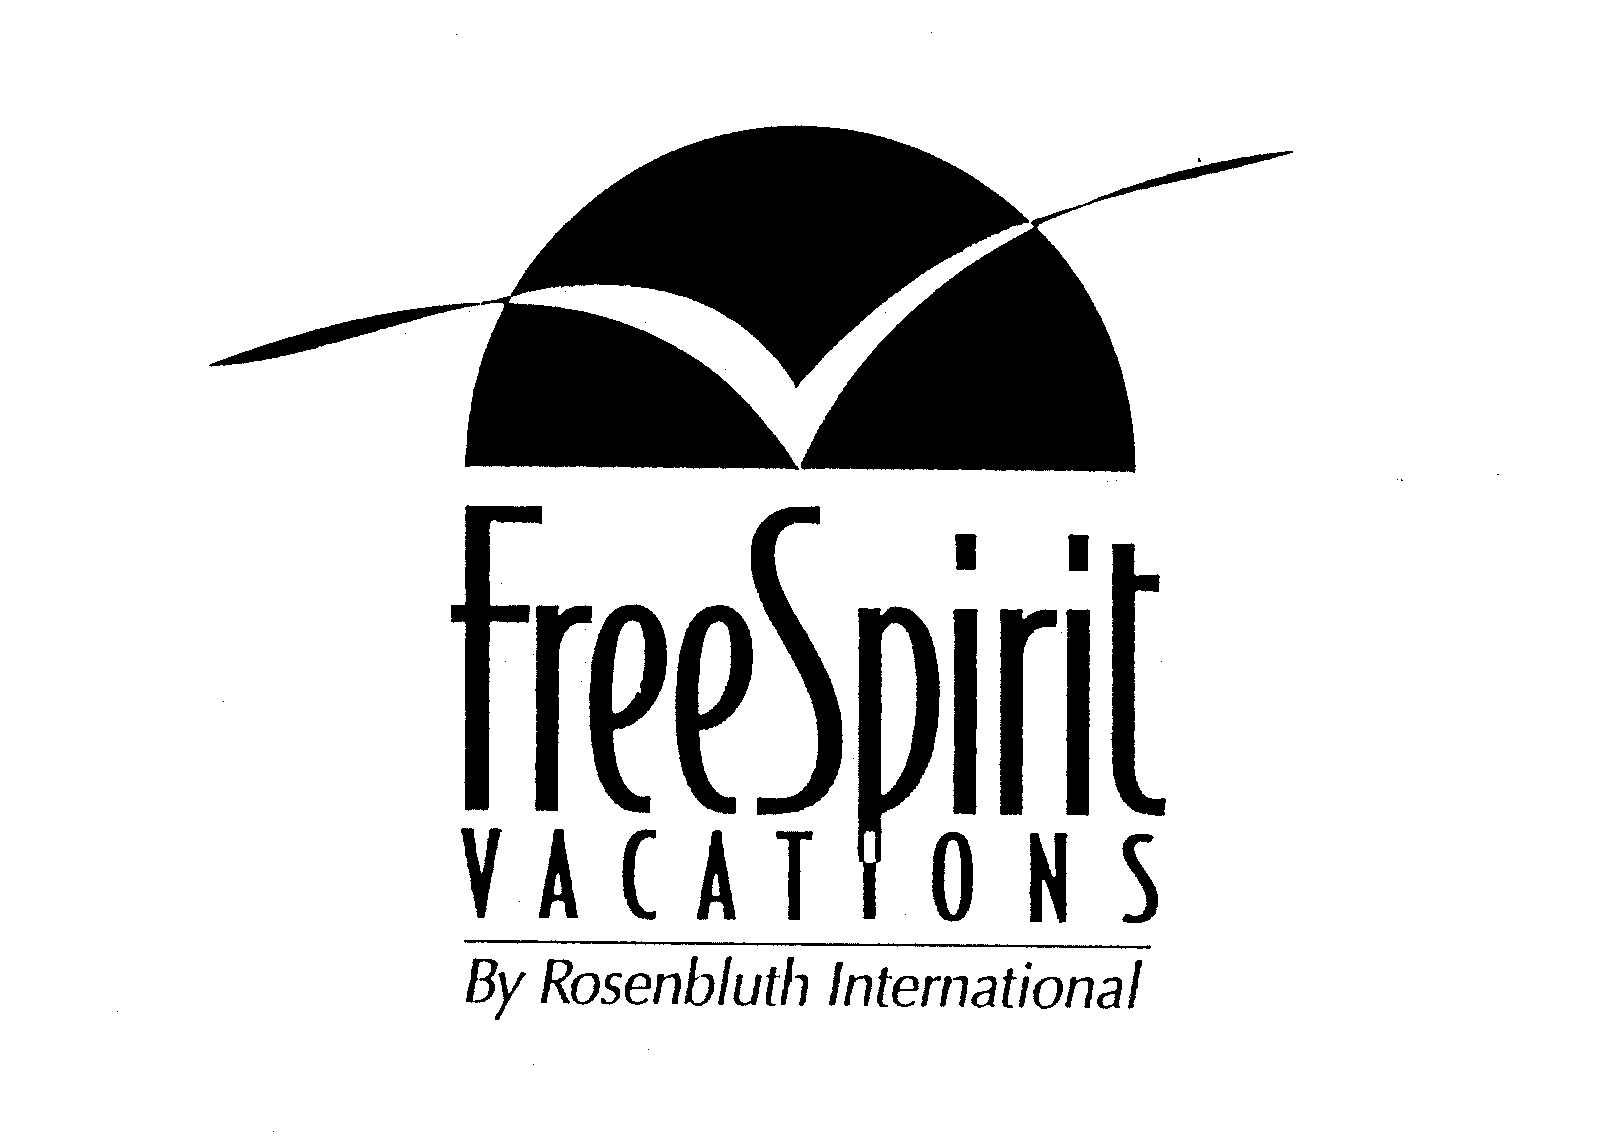  FREESPIRIT VACATIONS BY ROSENBLUTH INTERNATIONAL